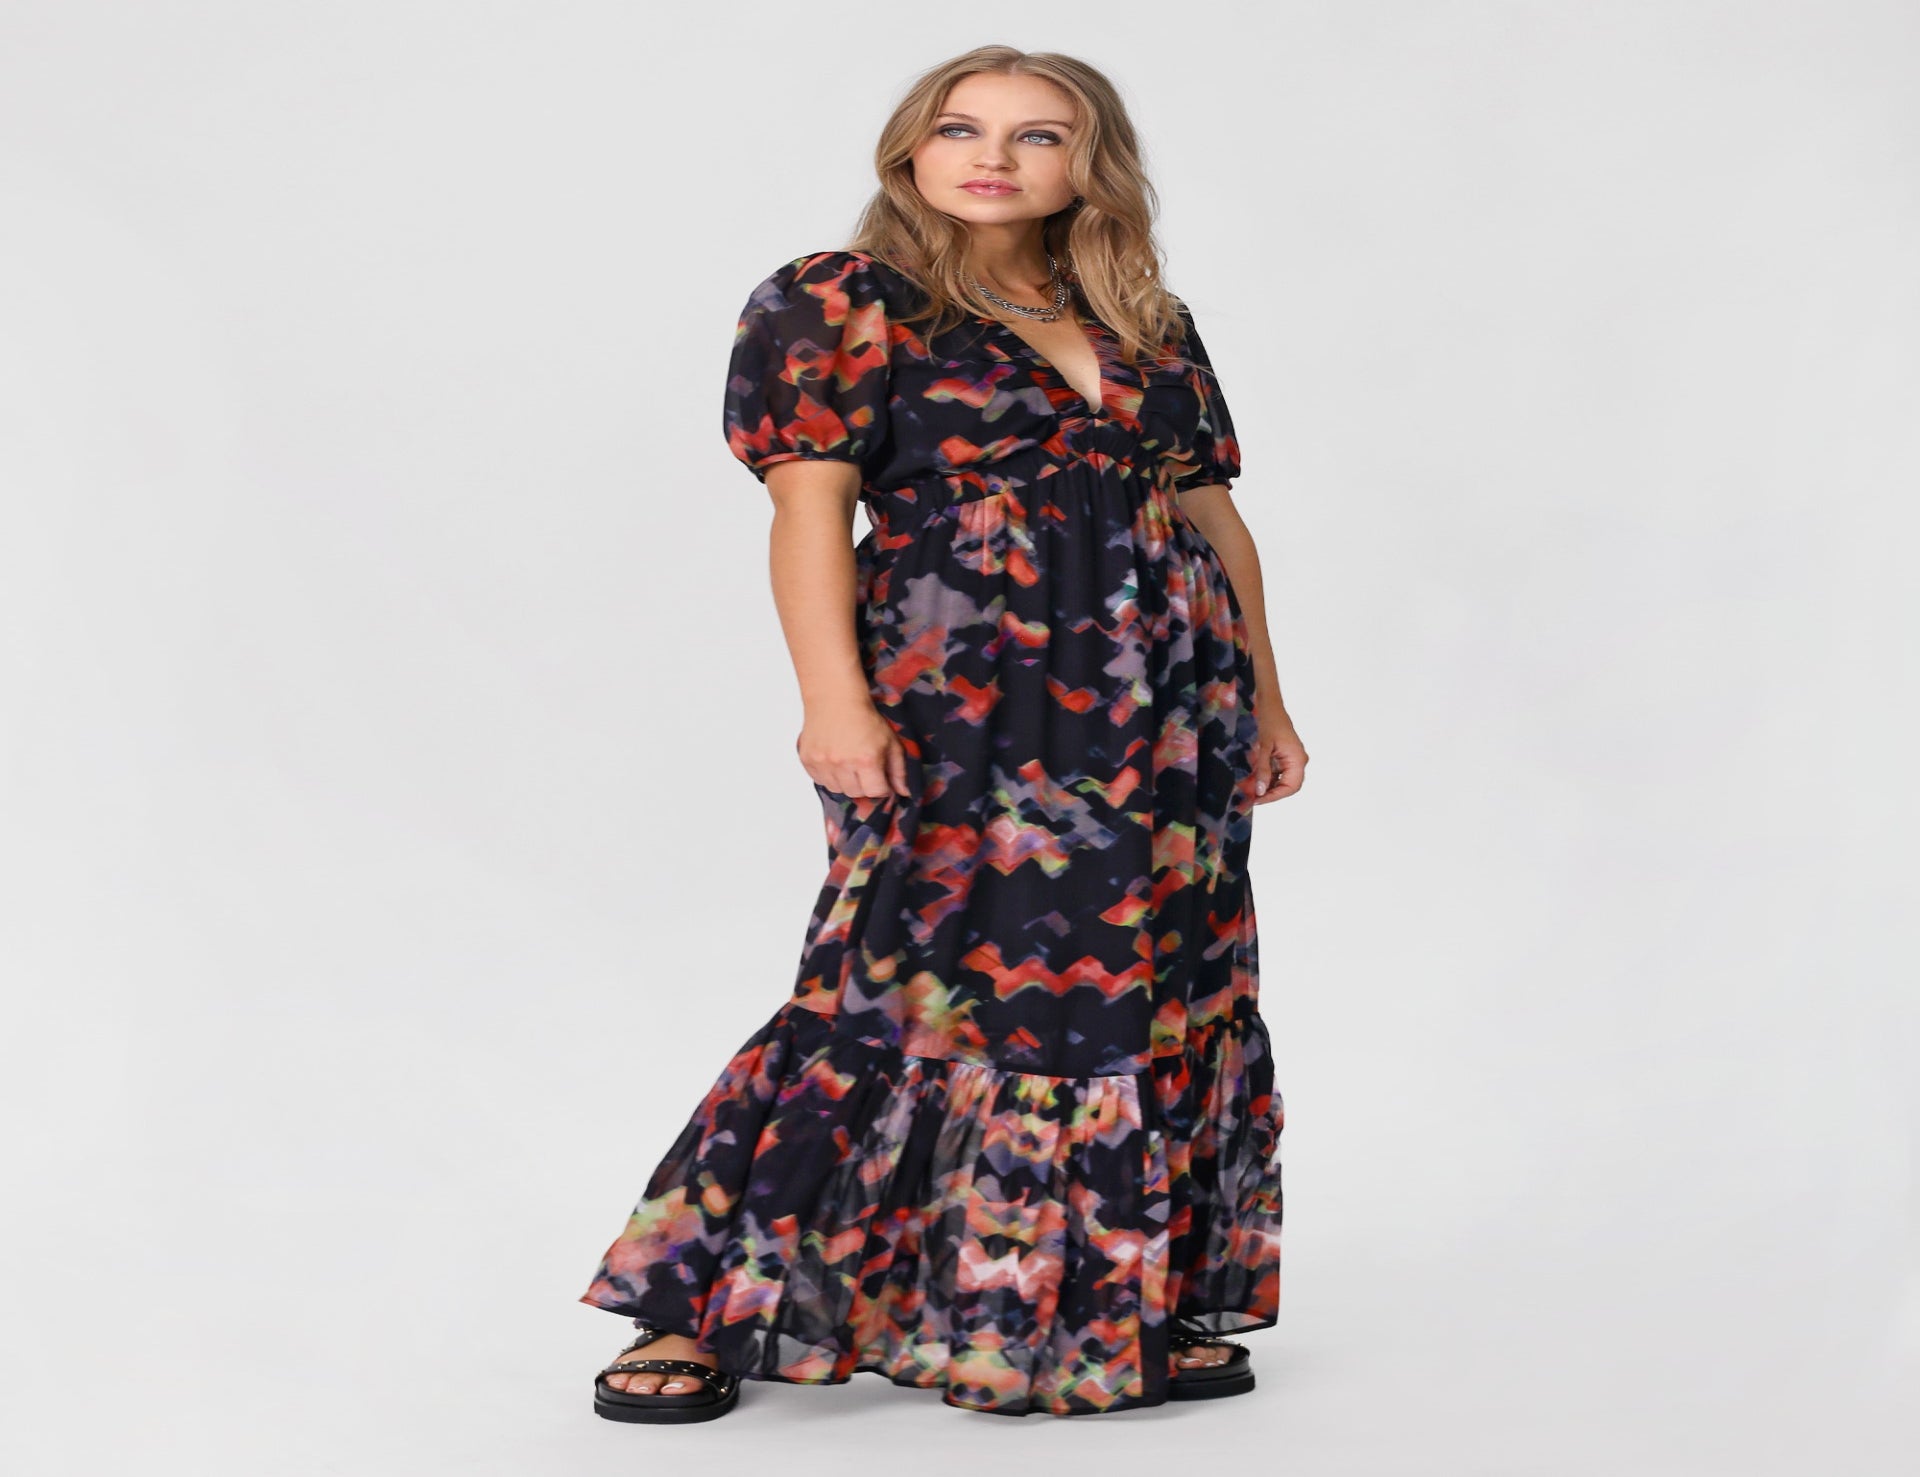 Hybrid Print Maxi Dress - Multi - Dress - Maxi - Women's Clothing - Storm